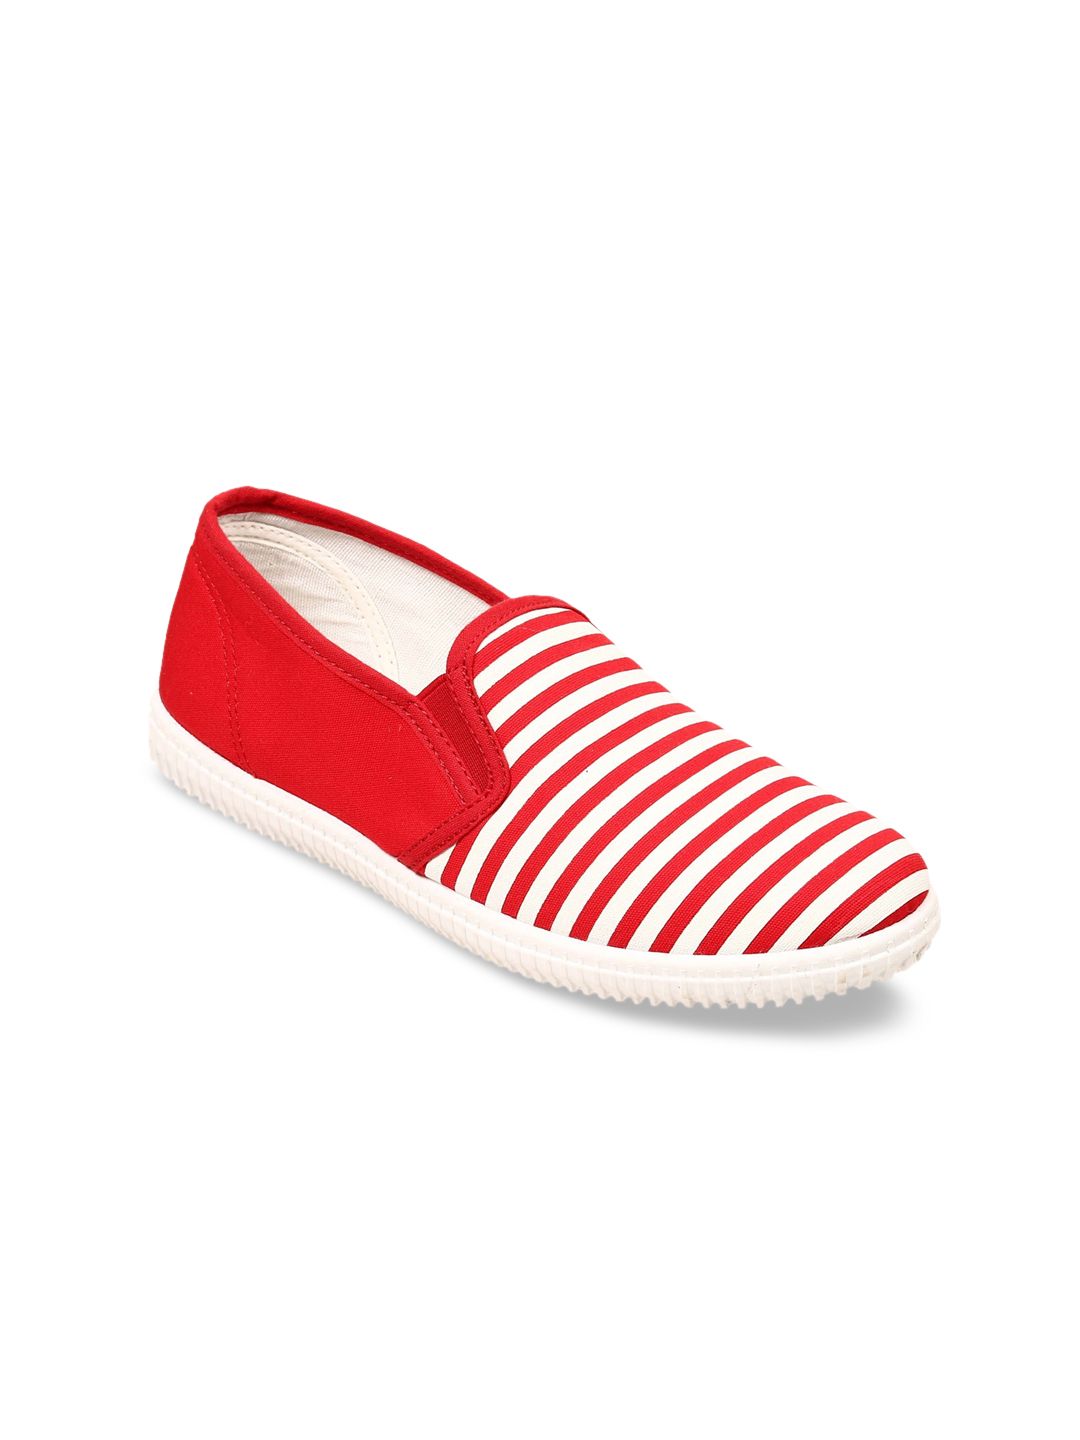 Lavie Women Red & White Striped Slip-On Sneakers Price in India